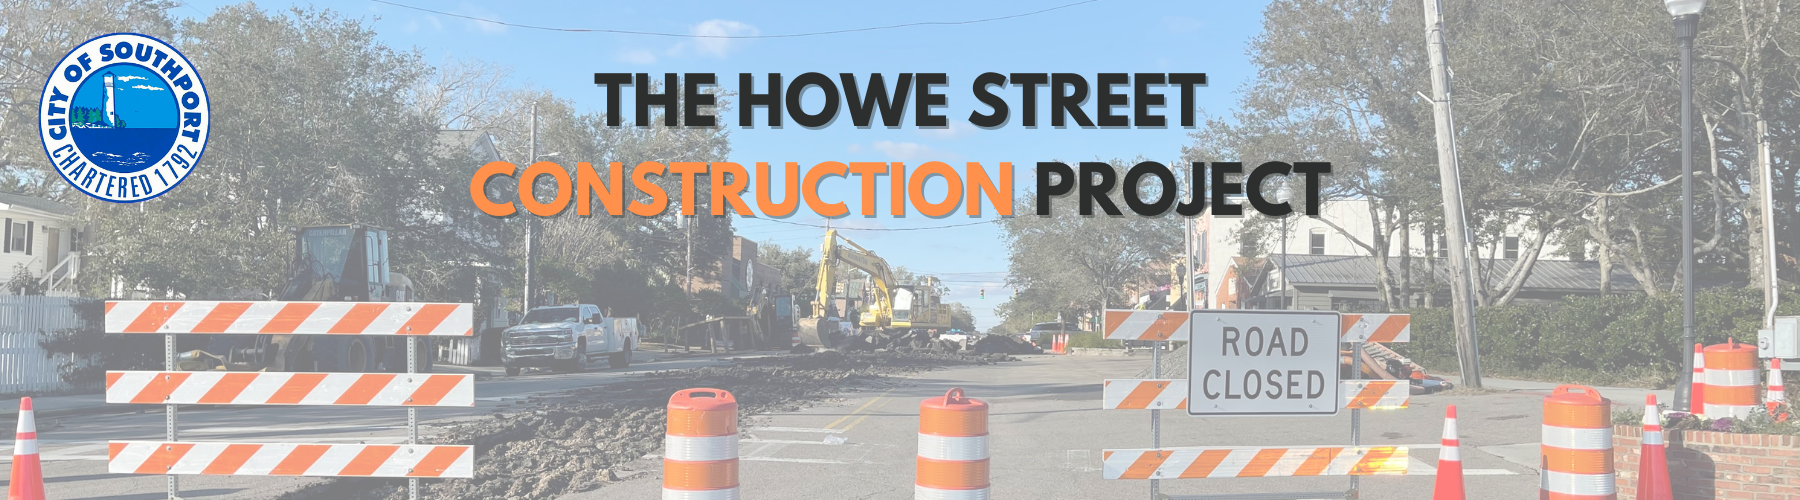 Howe Street Construction